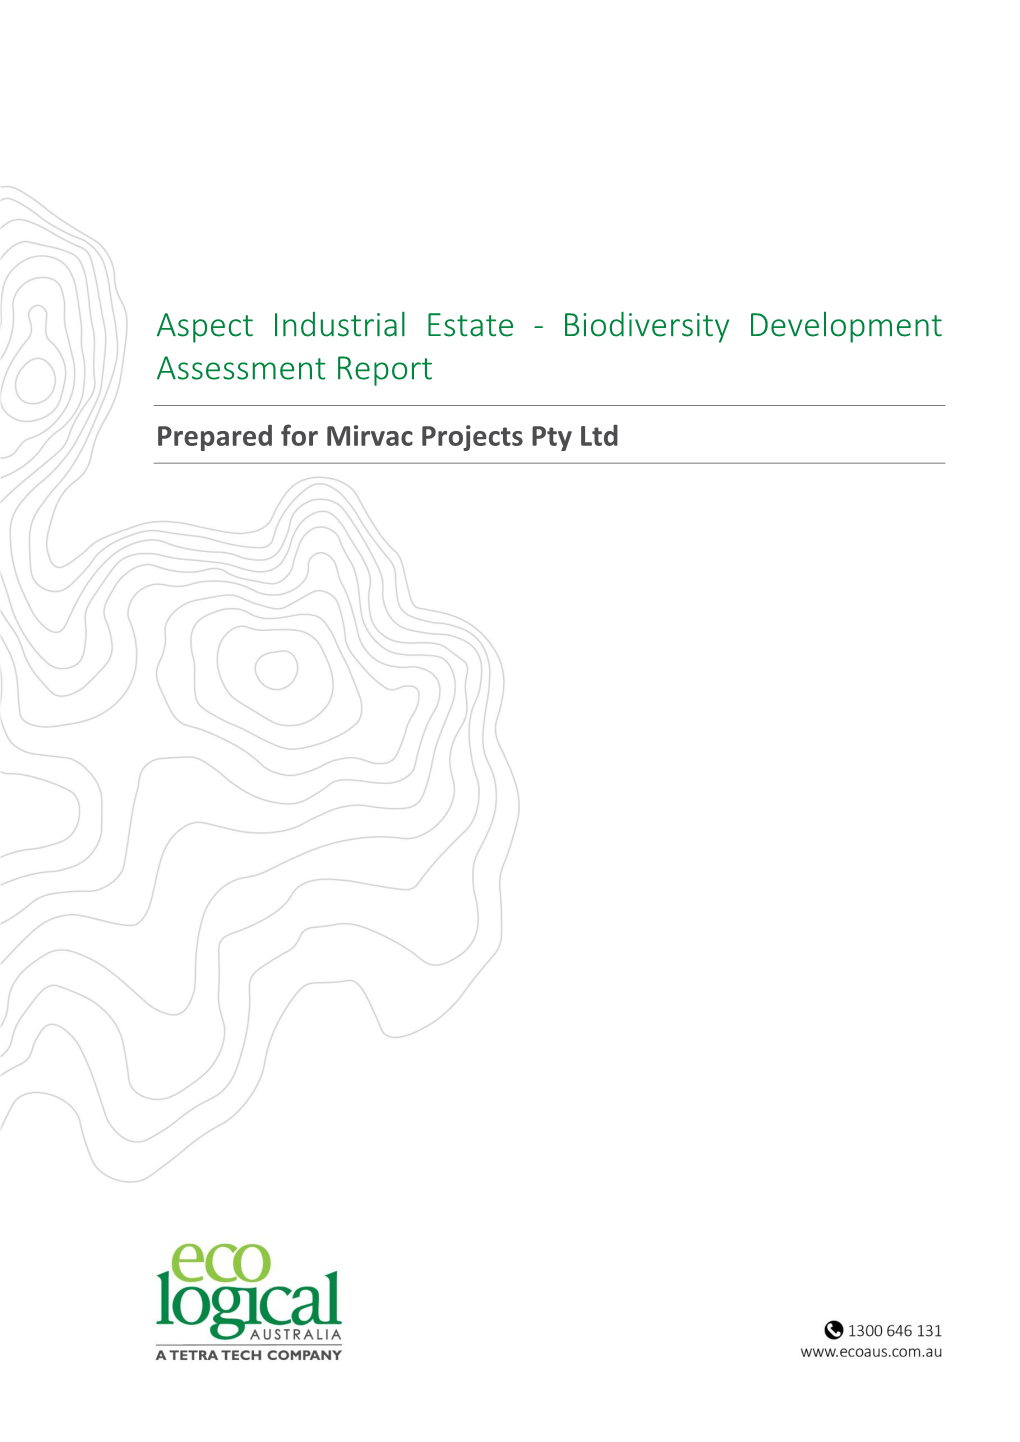 Aspect Industrial Estate - Biodiversity Development Assessment Report